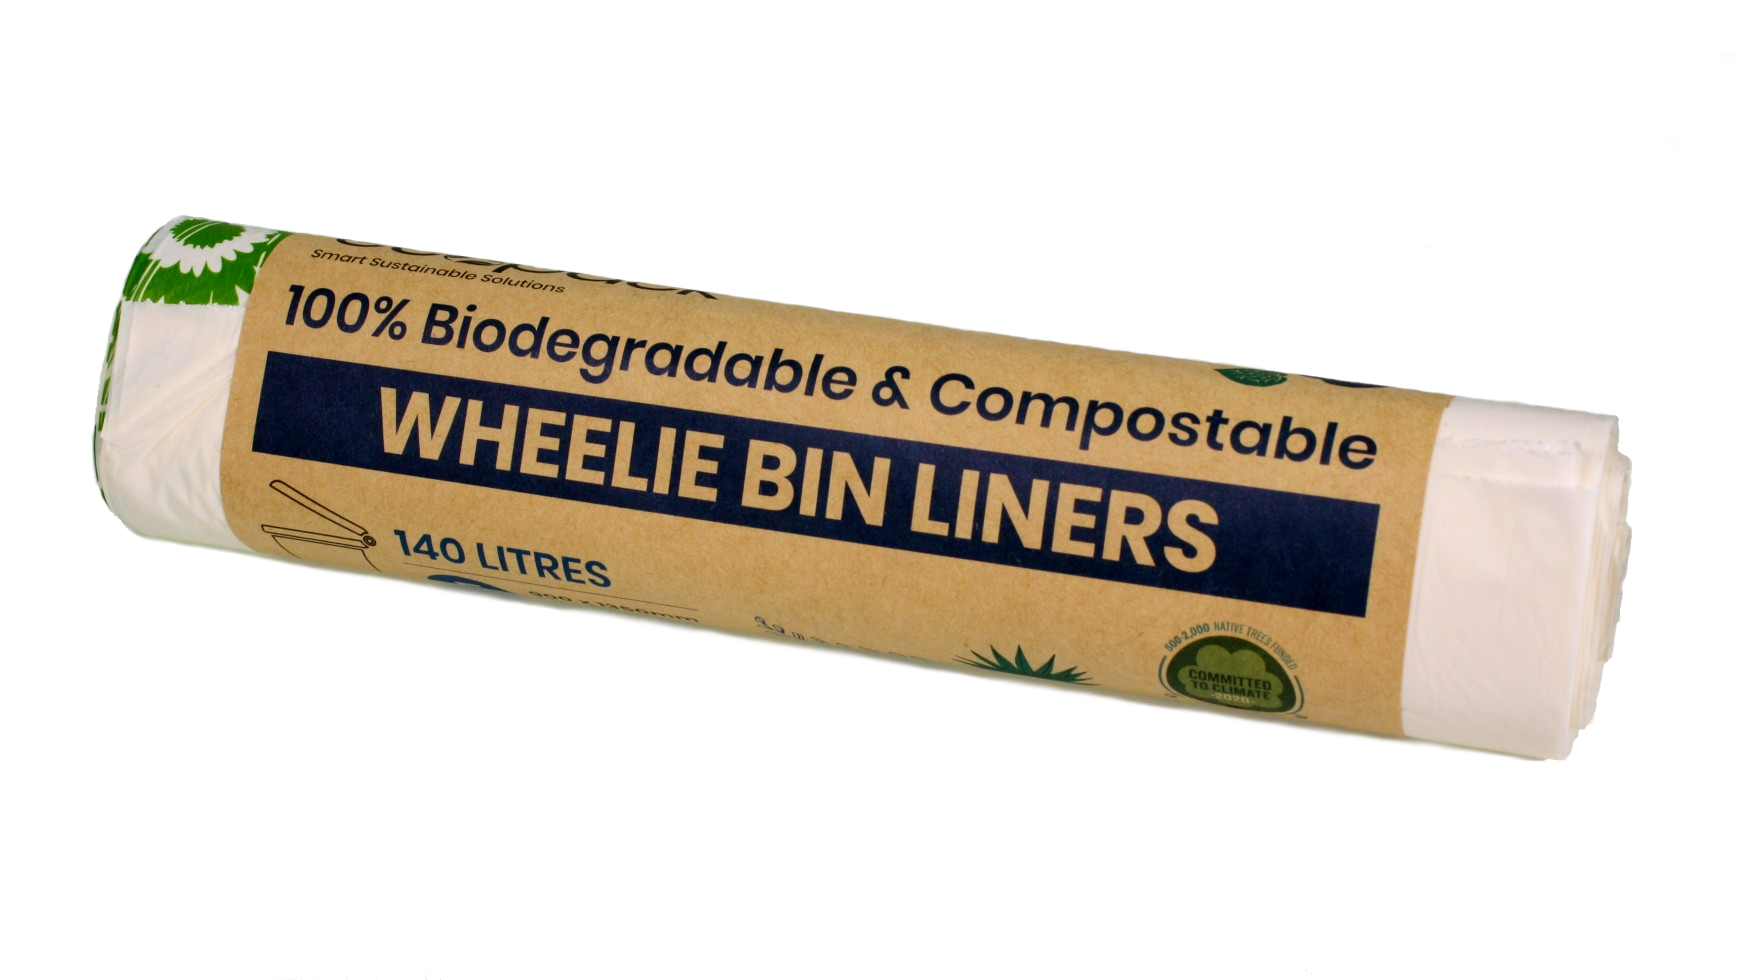 A pack of 5 wheelie bin liners